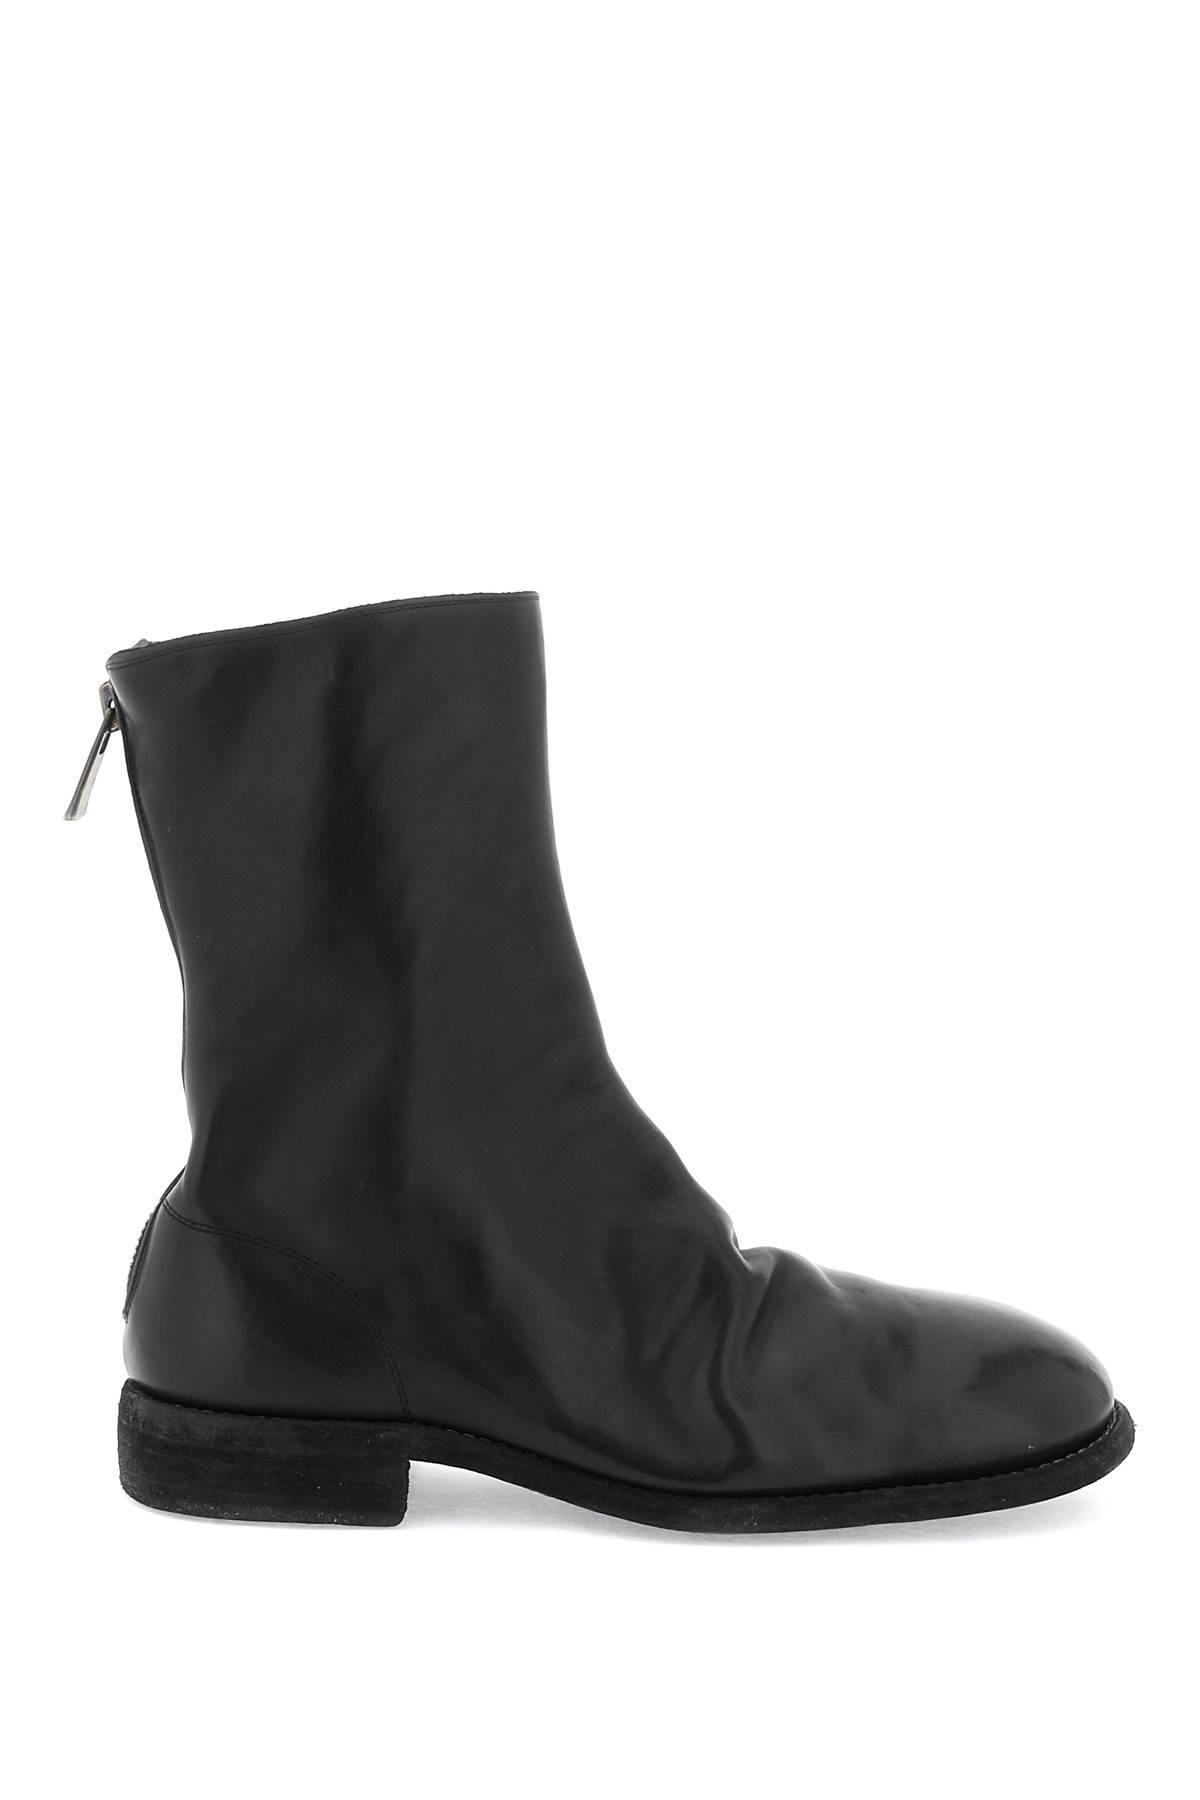 Guidi GUIDI leather boots